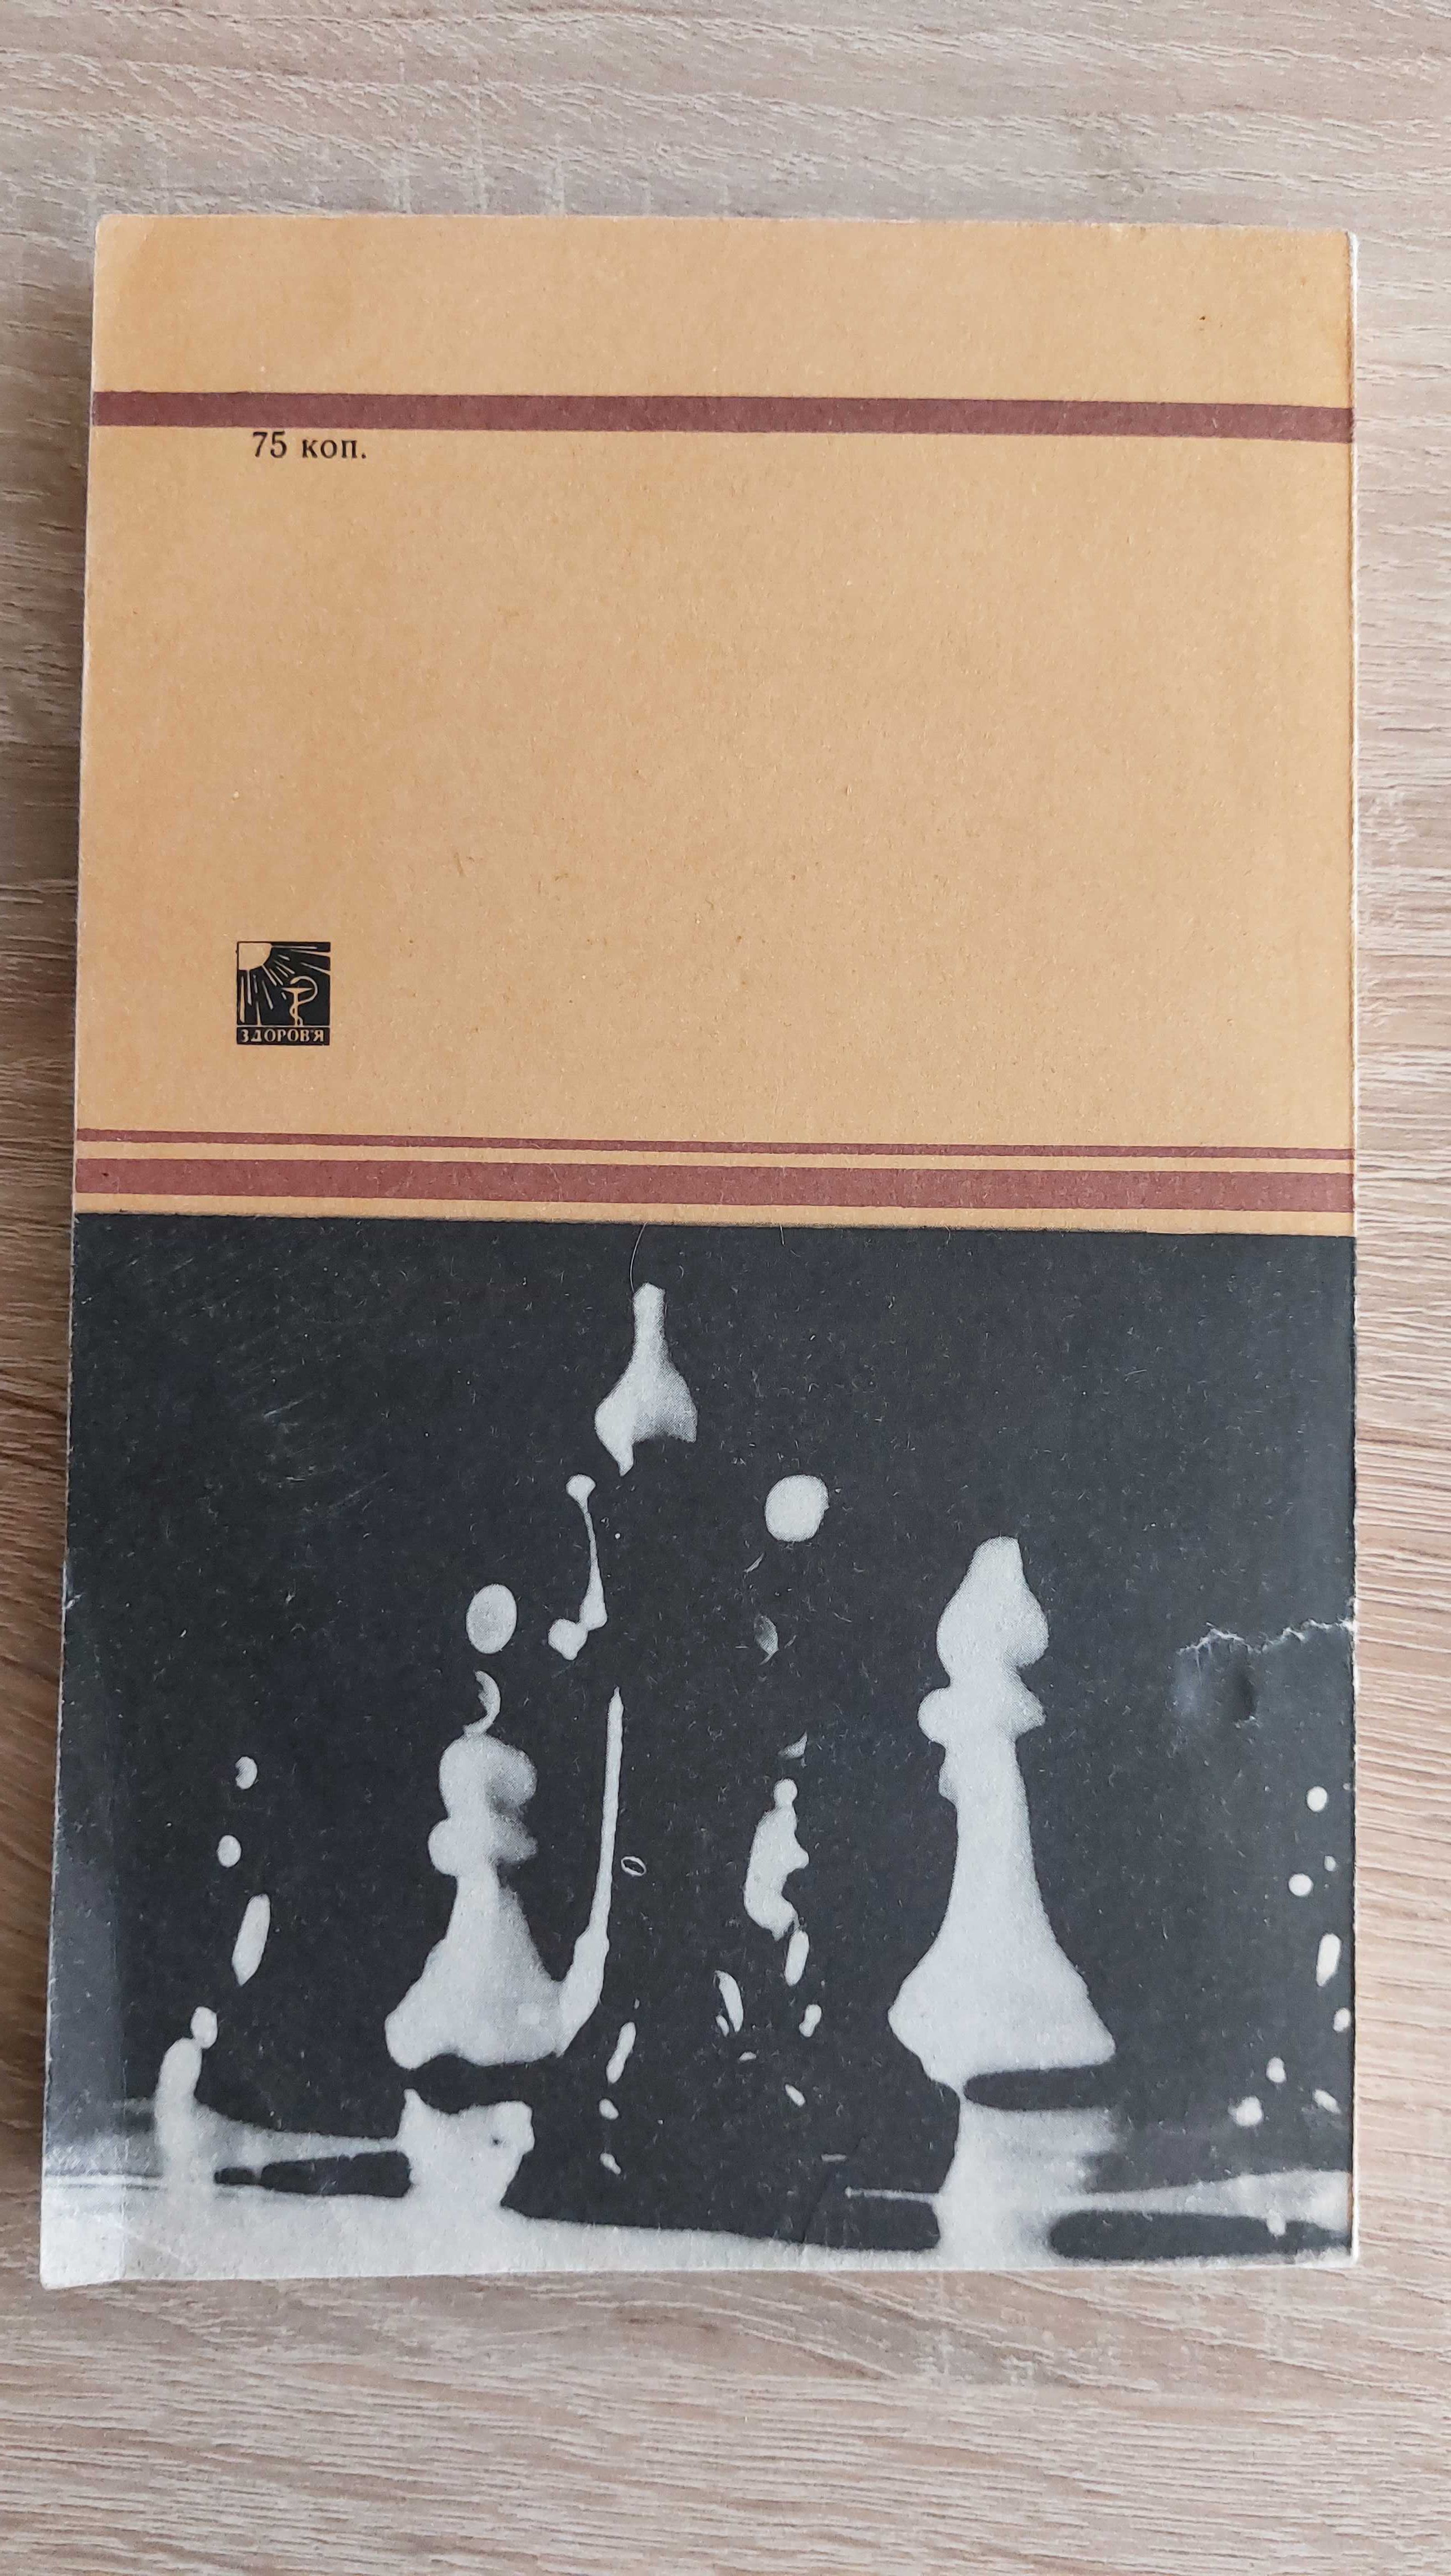 Книга по шахматам "Развитие Шахматного этюда"  авт.:Ф.С.Бондаренко